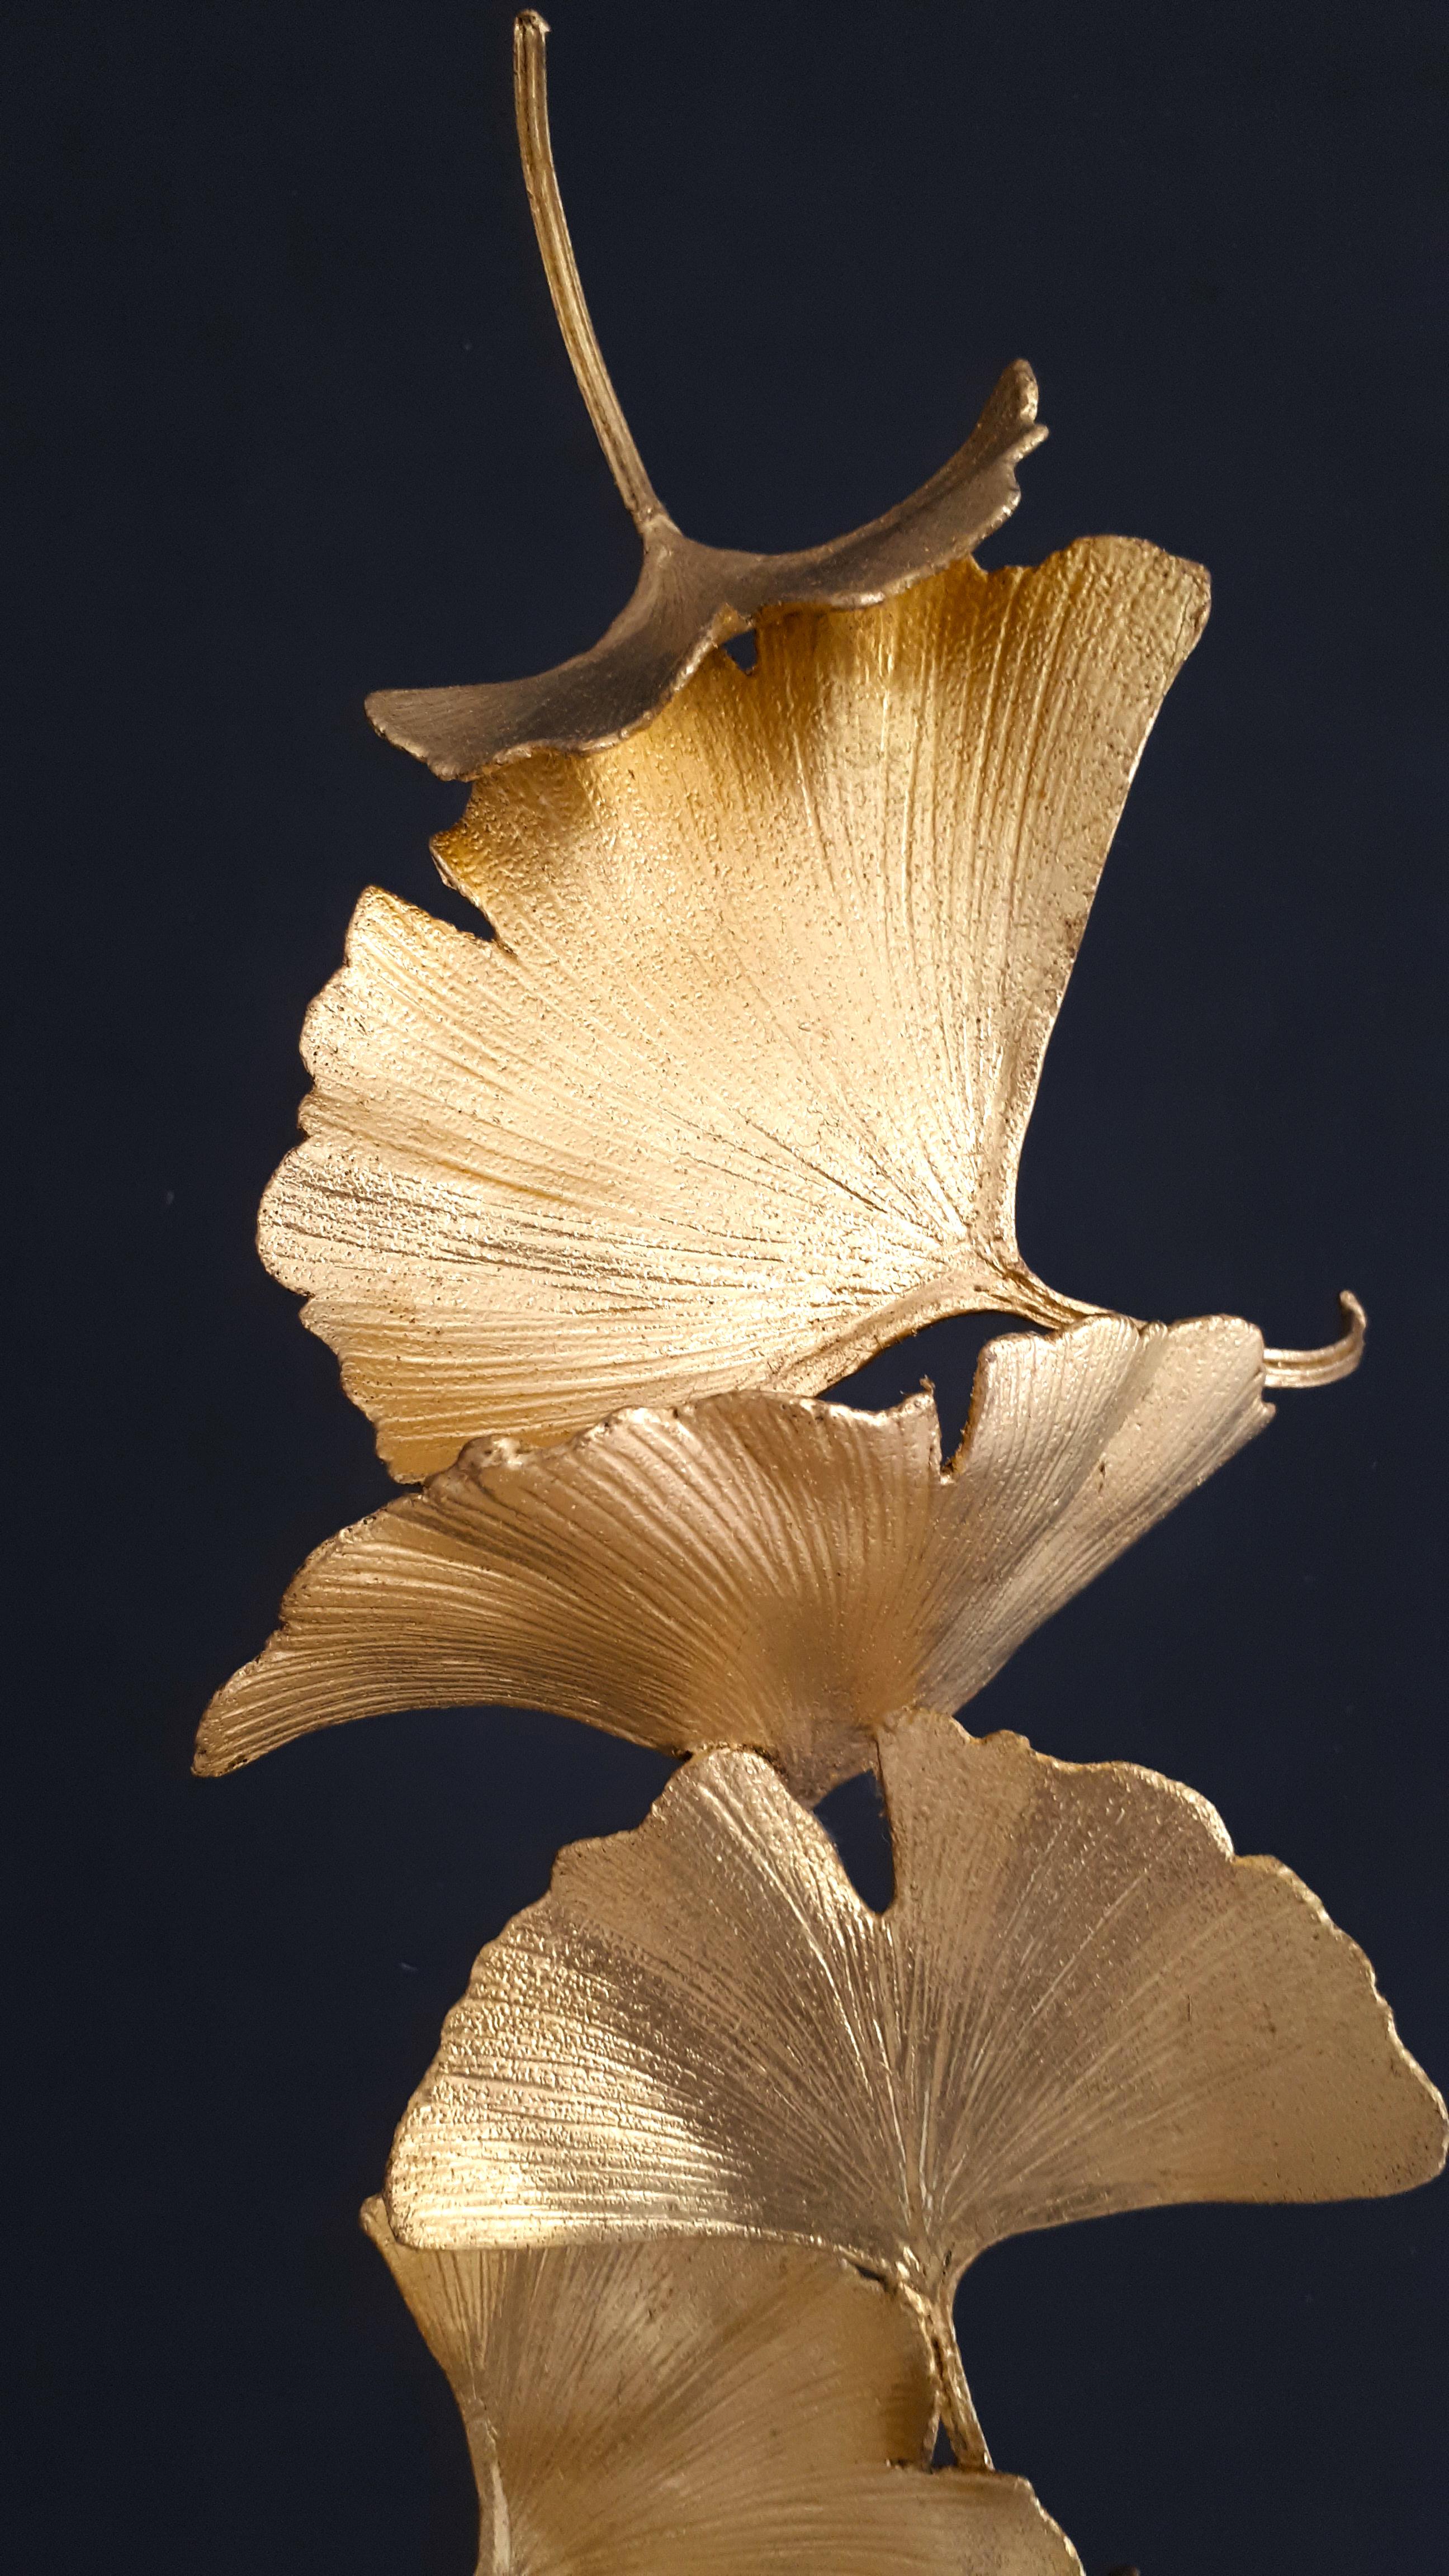 Artist: Kuno Vollet

Title: Golden Gingko with 6 leaves art sculpture

Materials: Cast brass, gold leaf, white marble base

Size: 56 x 9 x 9 cm

_______________________________________________________________________

This elegant original bronze